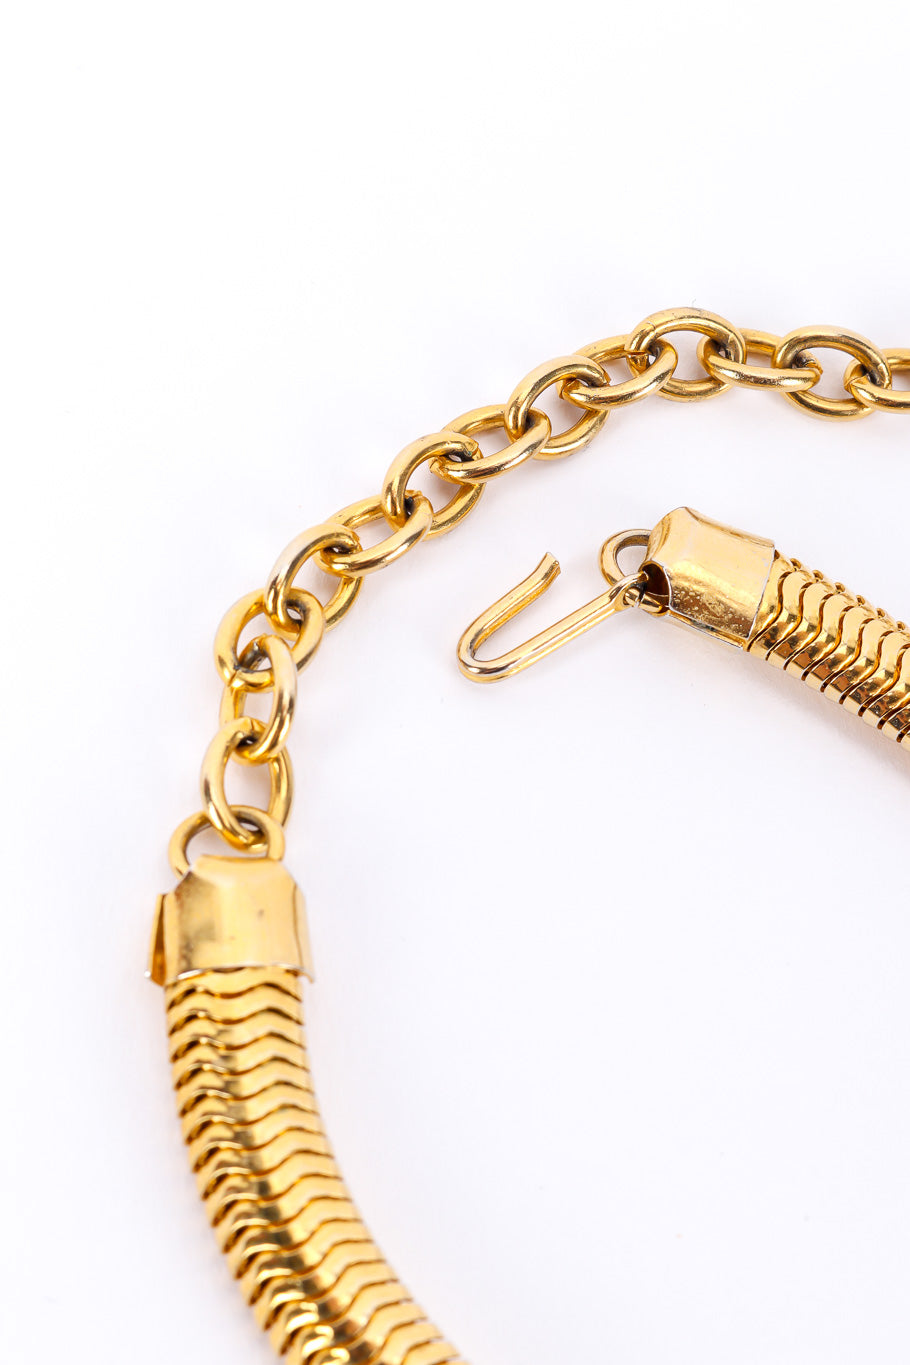 Vintage Swirl Motif Collar Necklace hook and extender chain closeup @Recessla